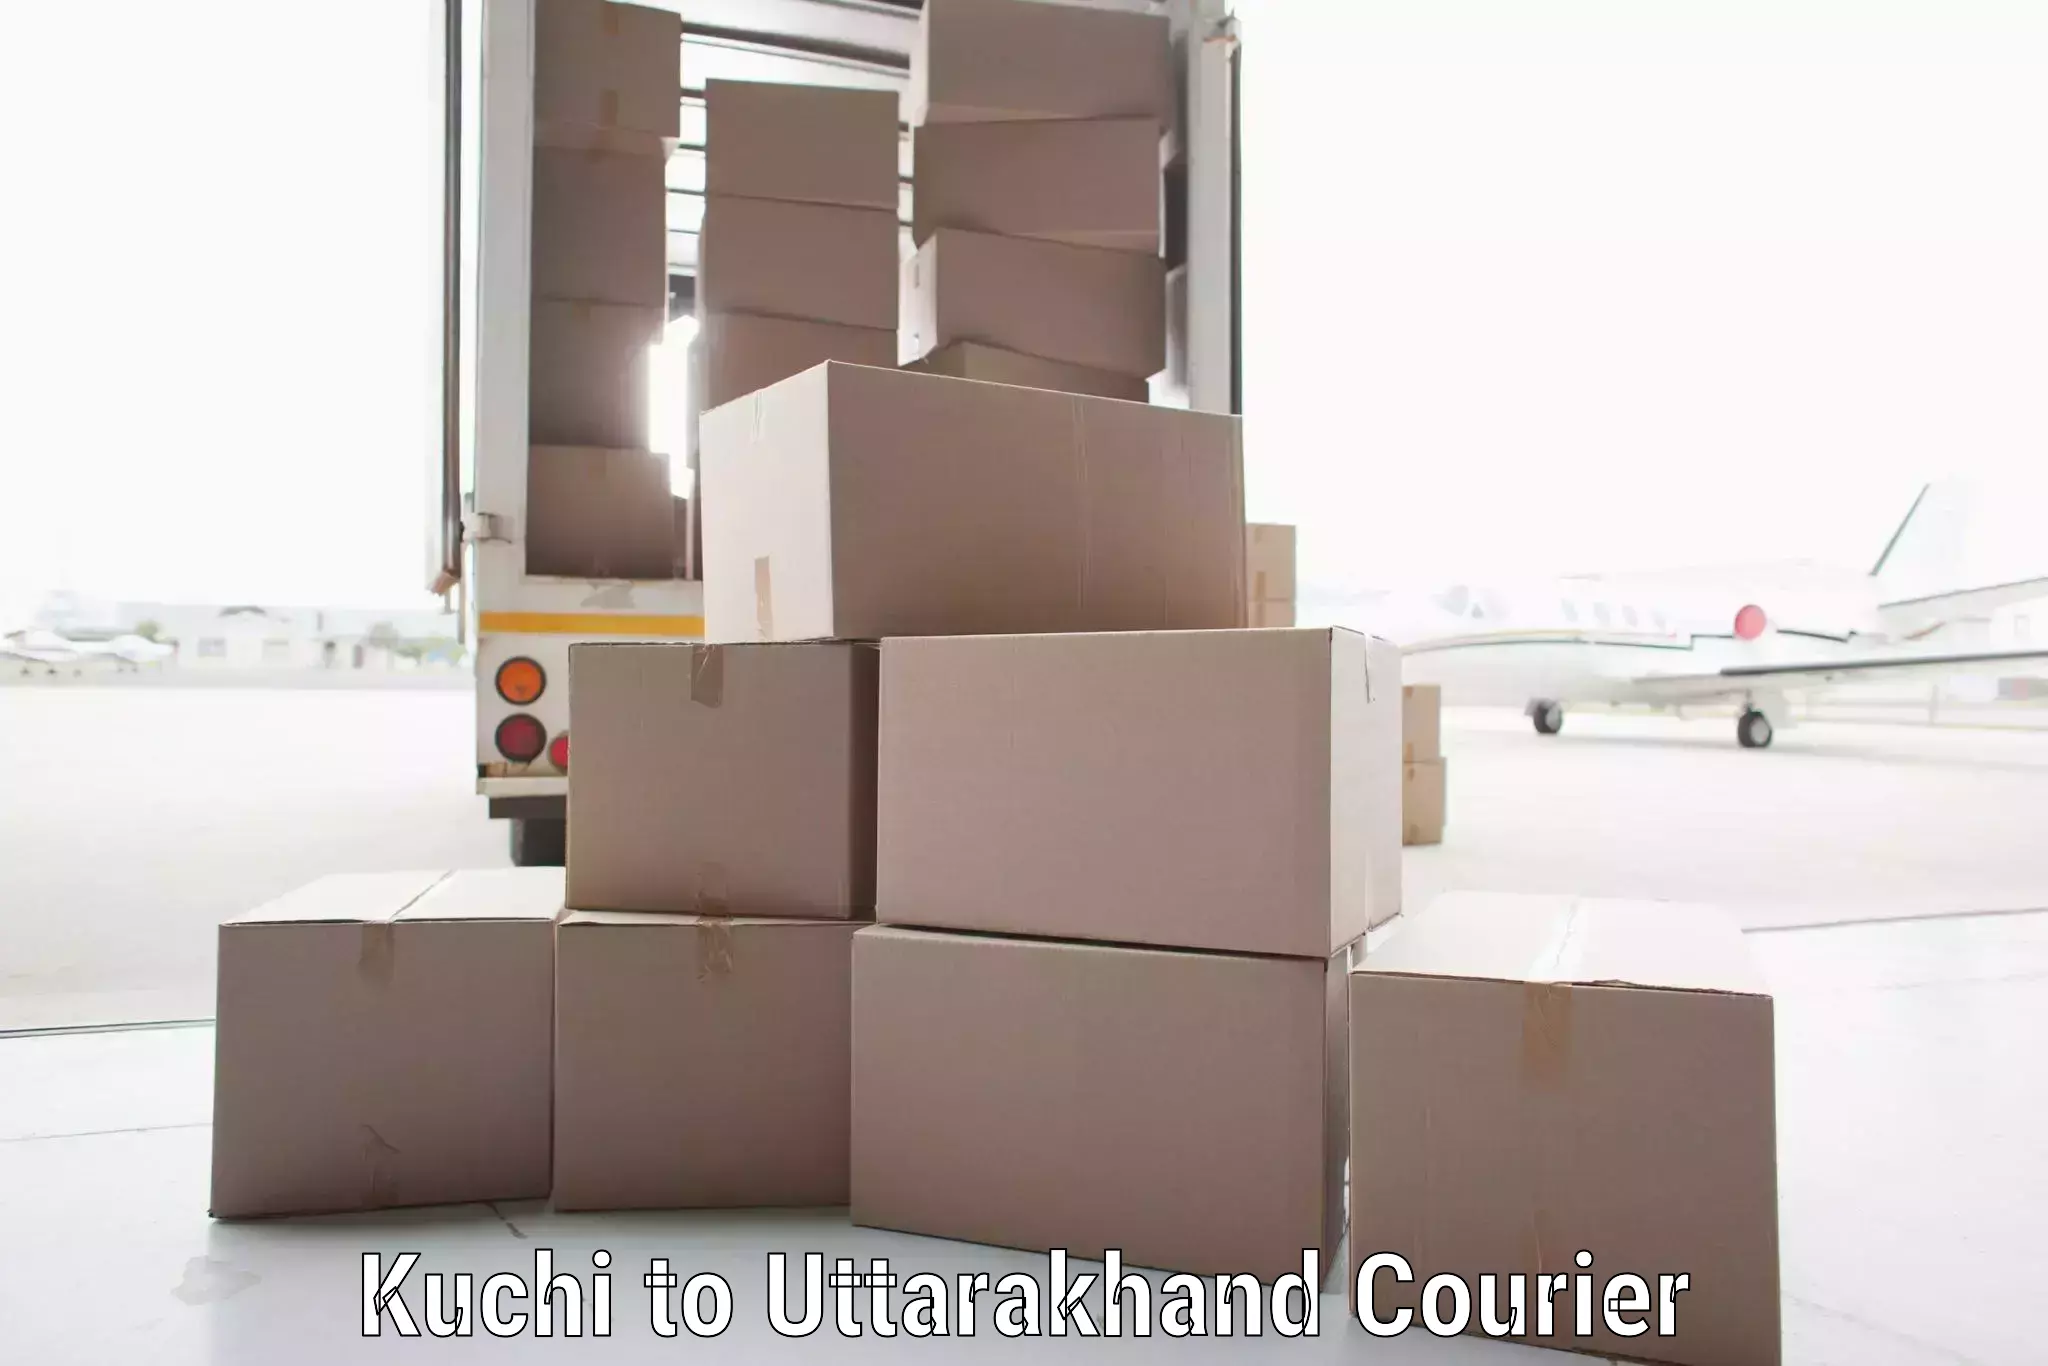 Flexible delivery schedules Kuchi to Uttarakhand